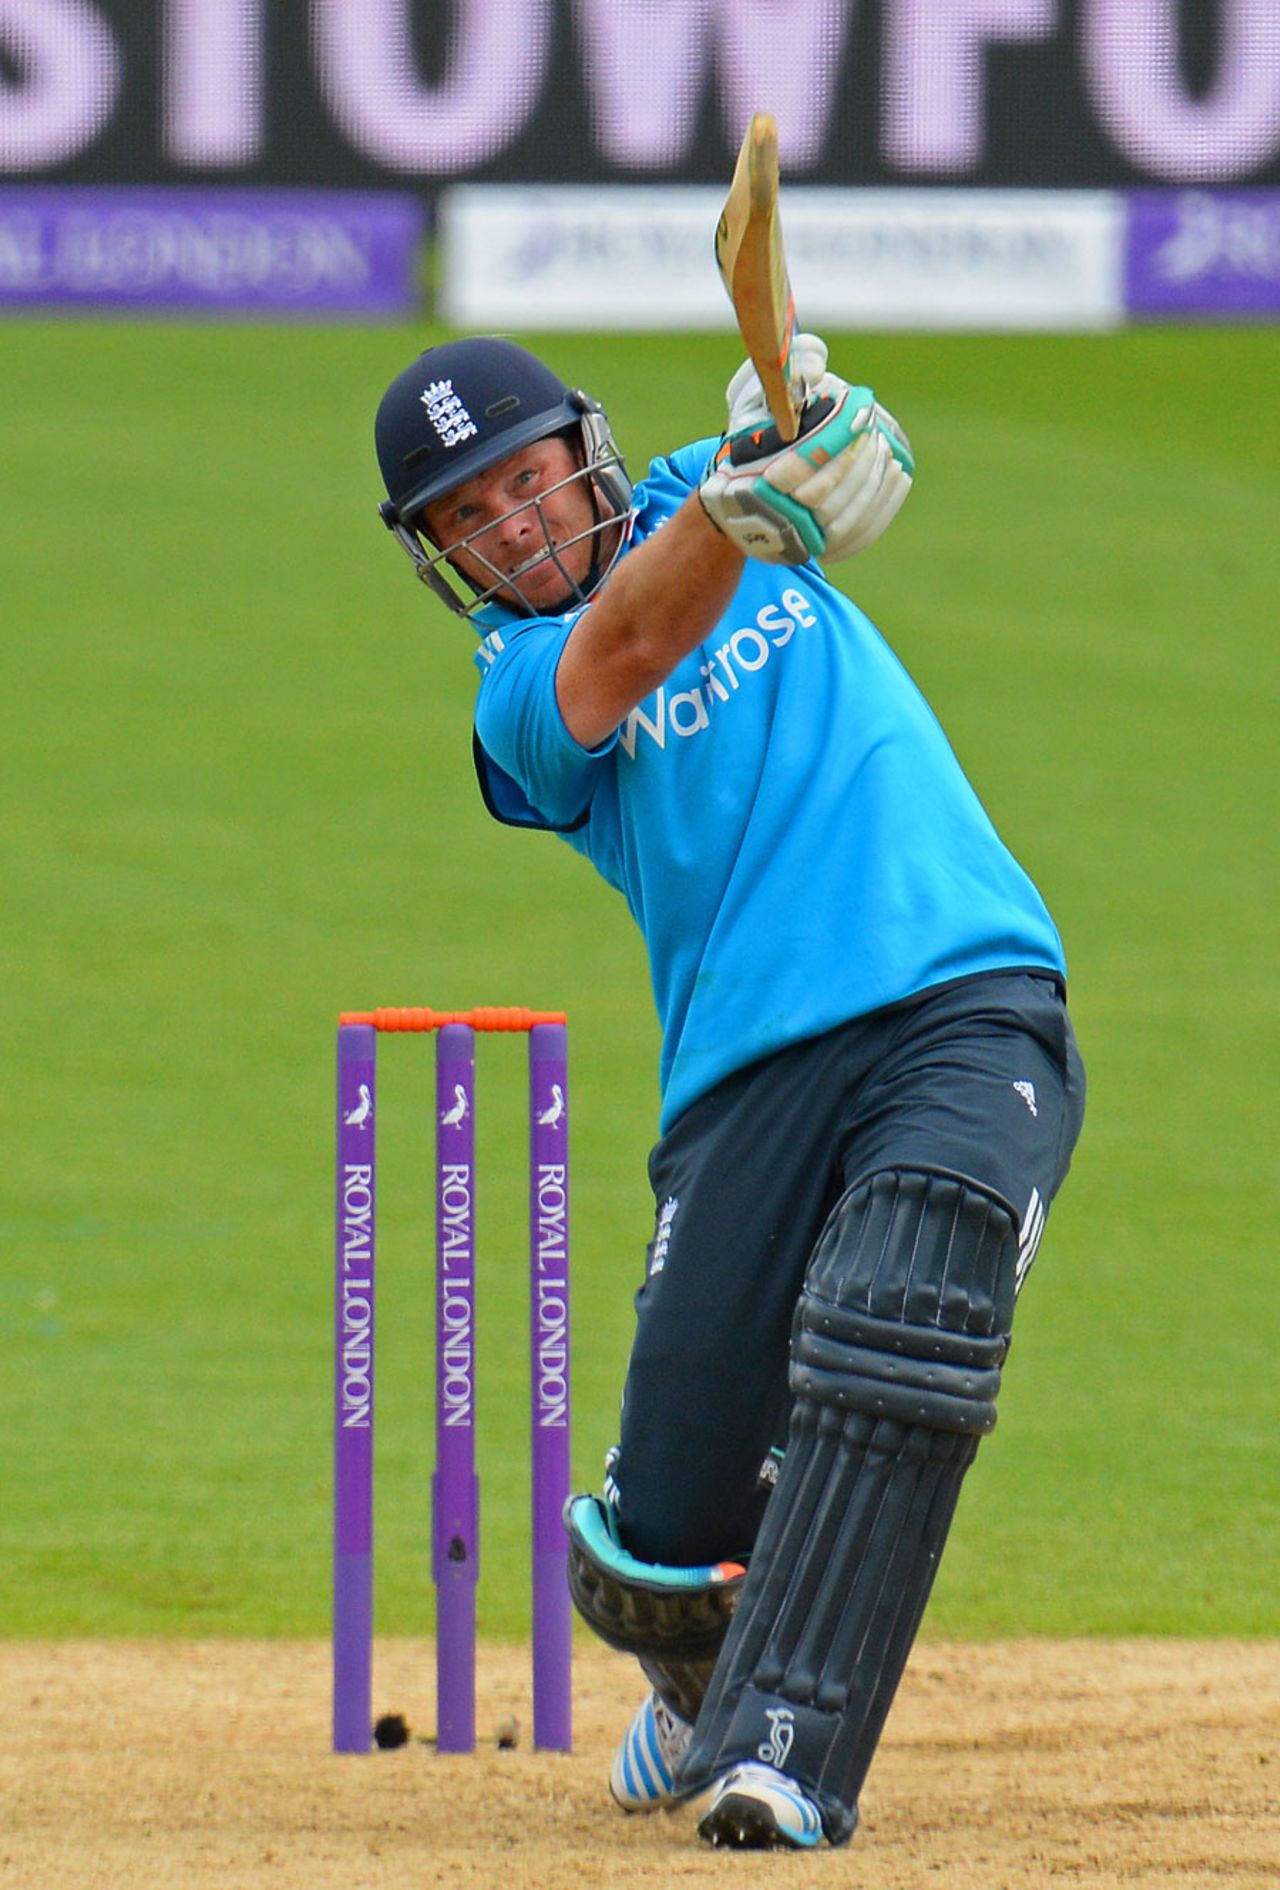 Ian Bell hit one straight six, England v Sri Lanka, 1st ODI, The Oval, May 22, 2014